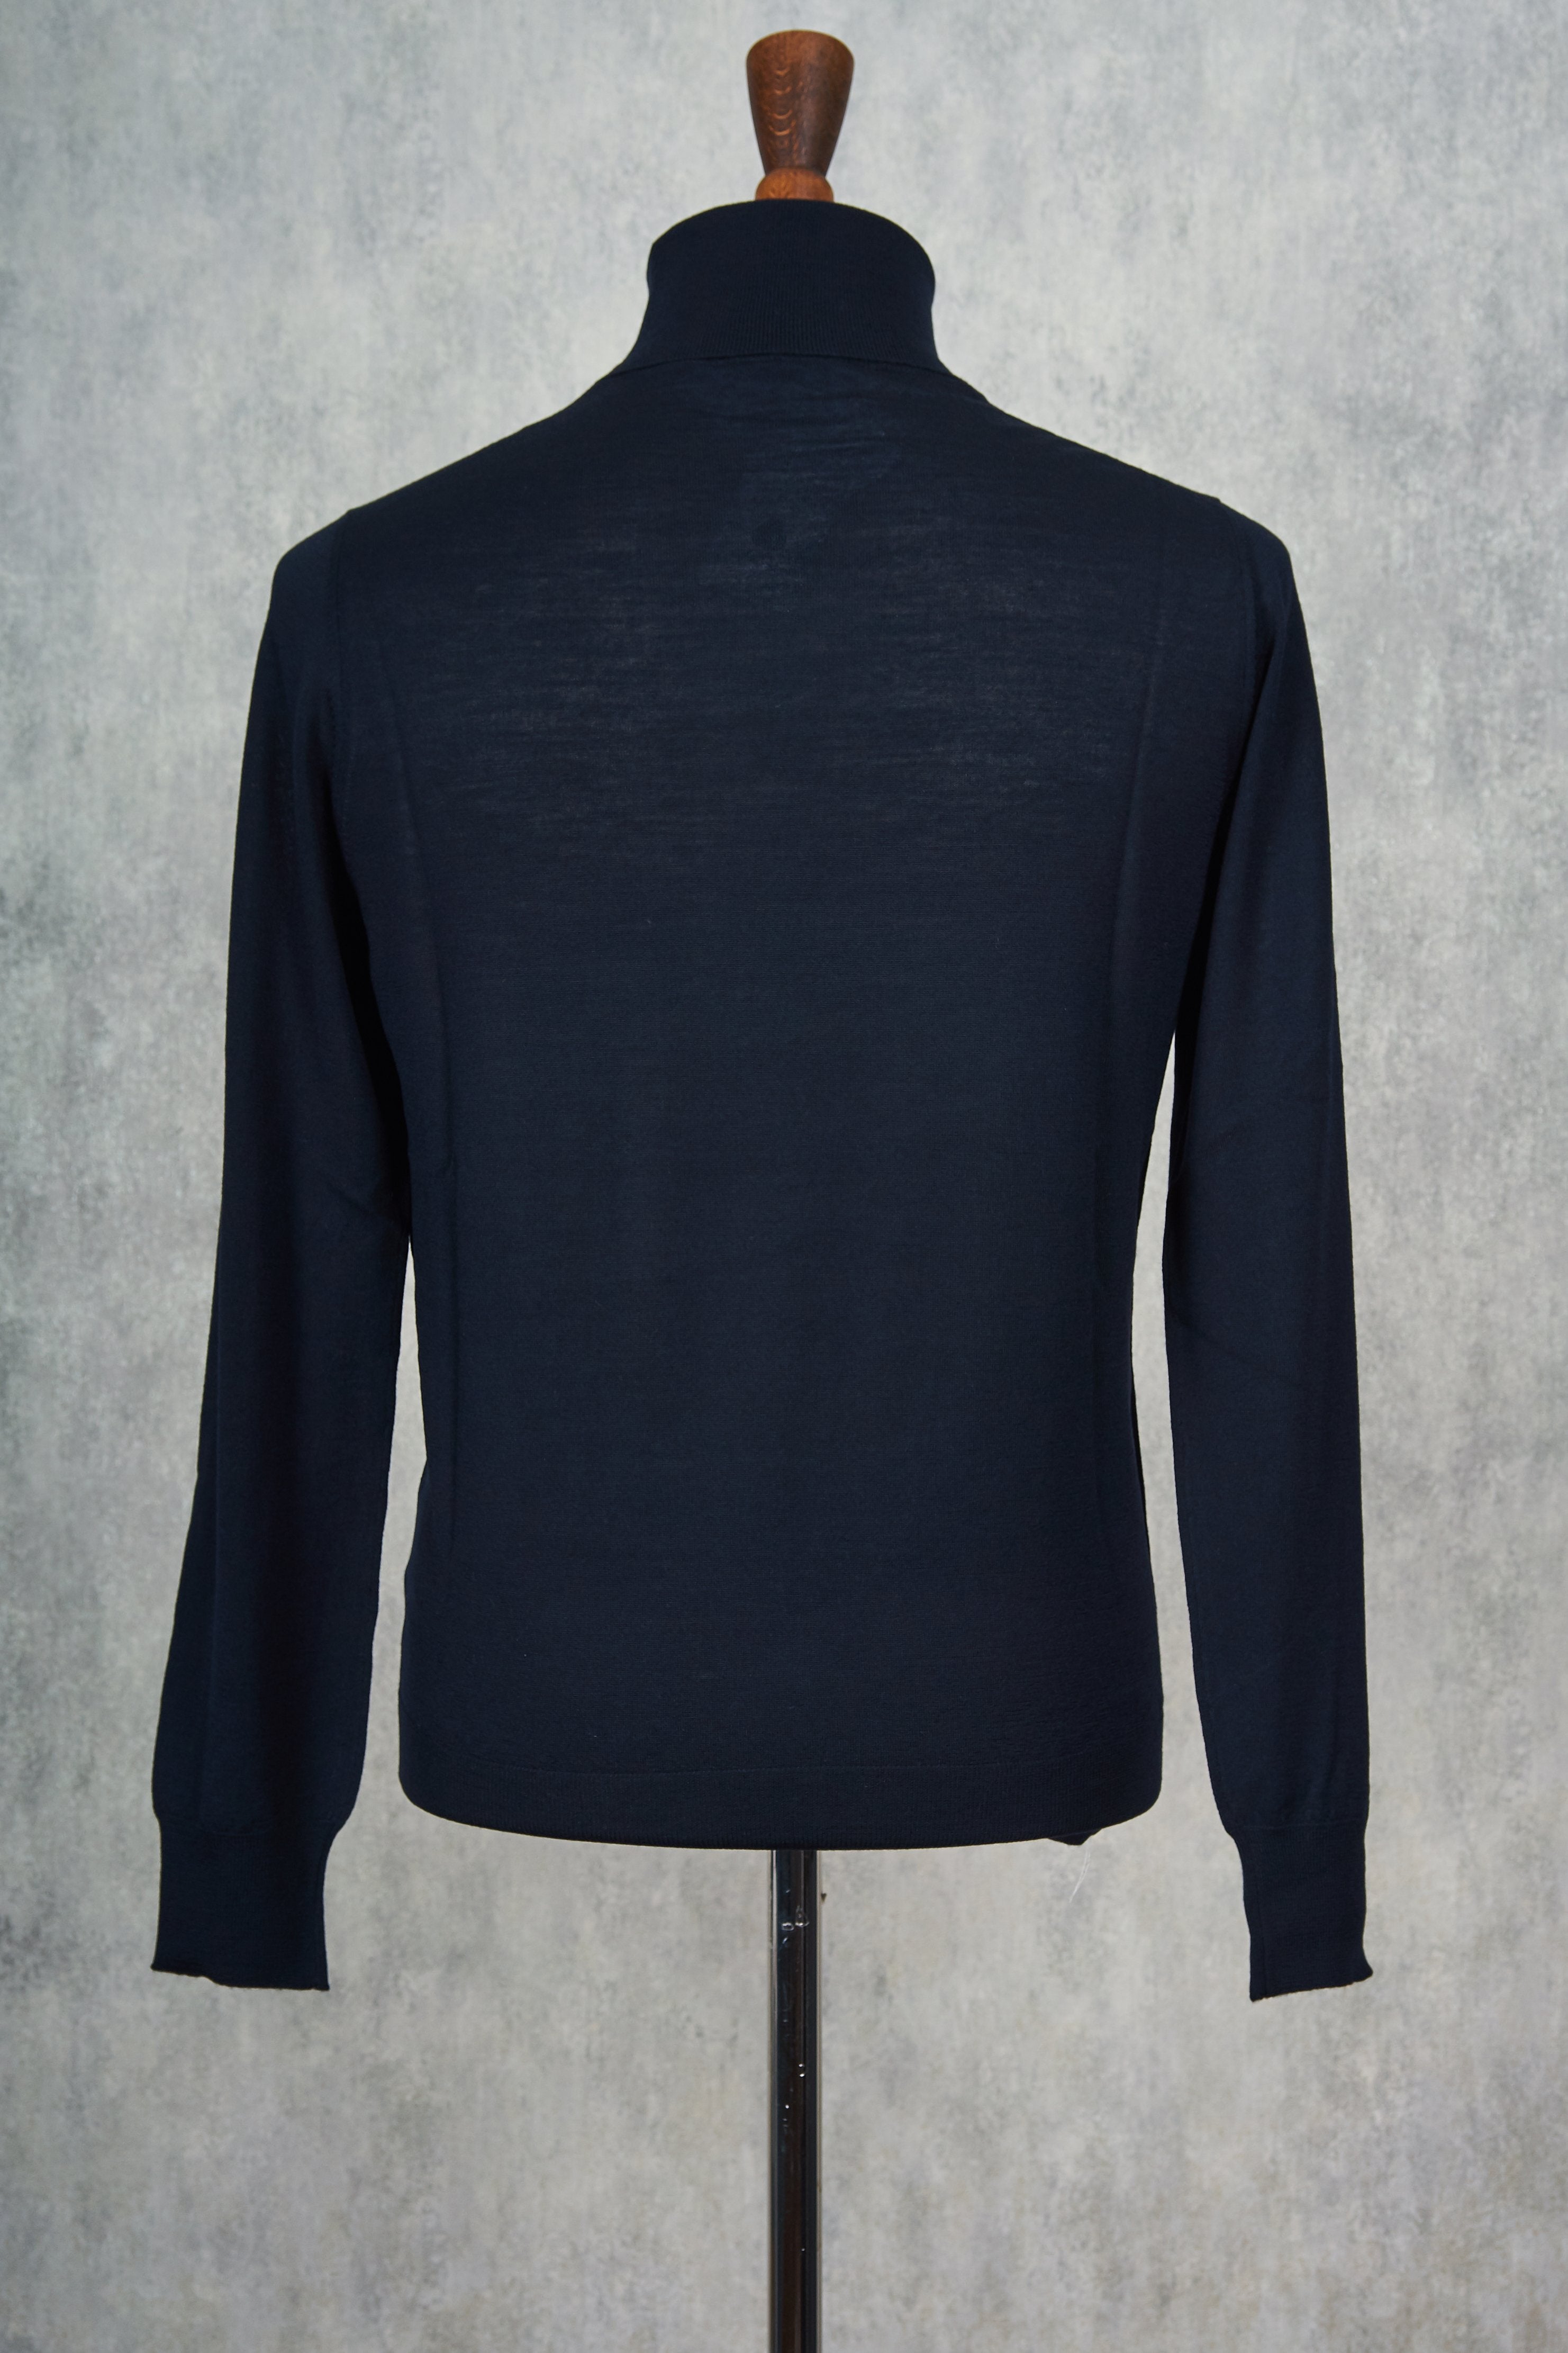 Ascot Chang Navy Extra-Fine Merino Wool Turtleneck Sweater